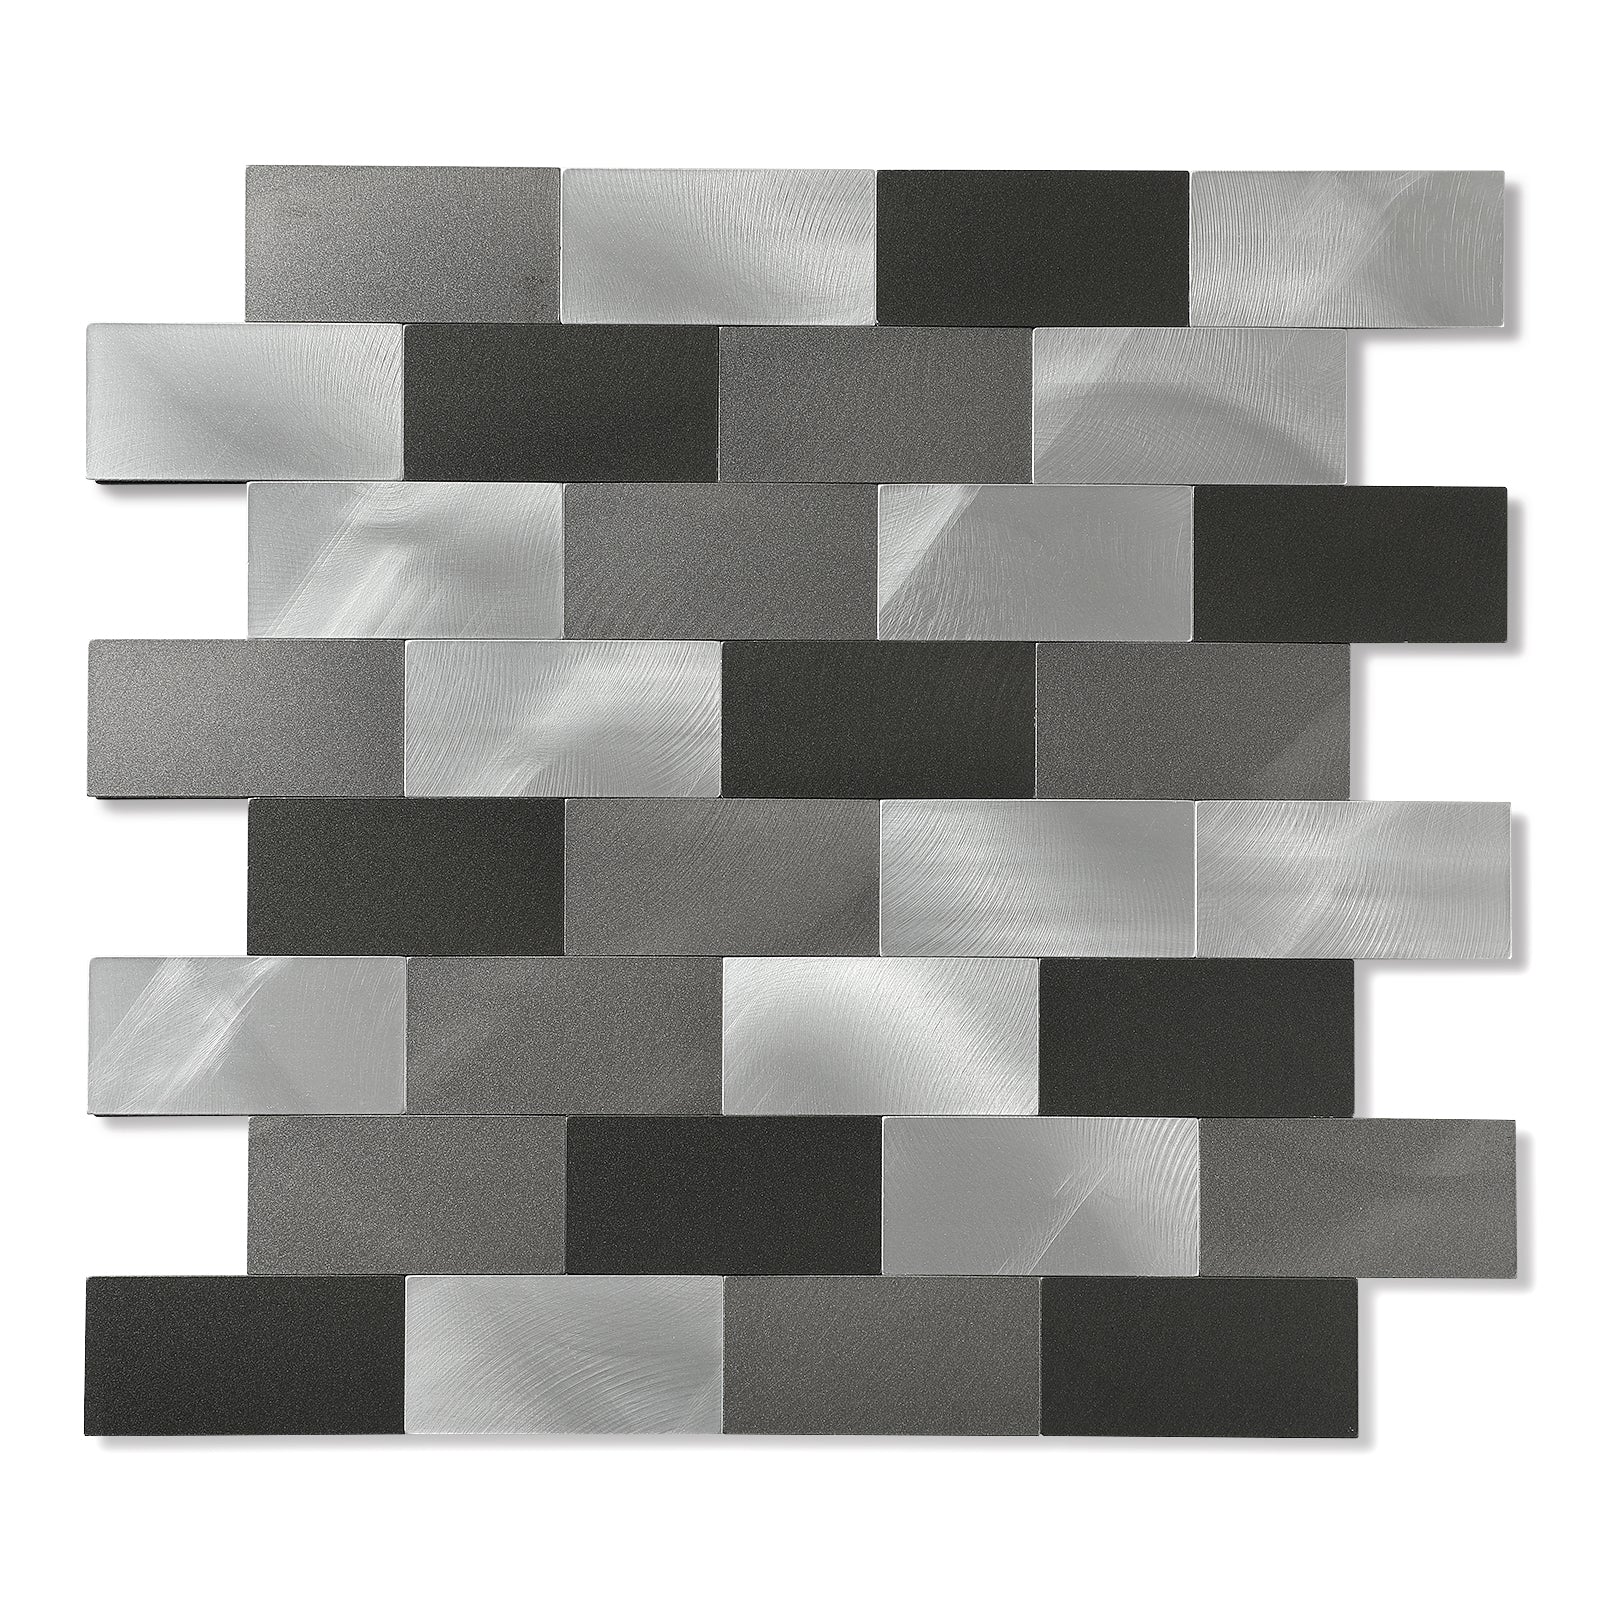 11.8" X 11.8" Black Stick on Metal Backplash Stainless Steel Subway Wall Tile